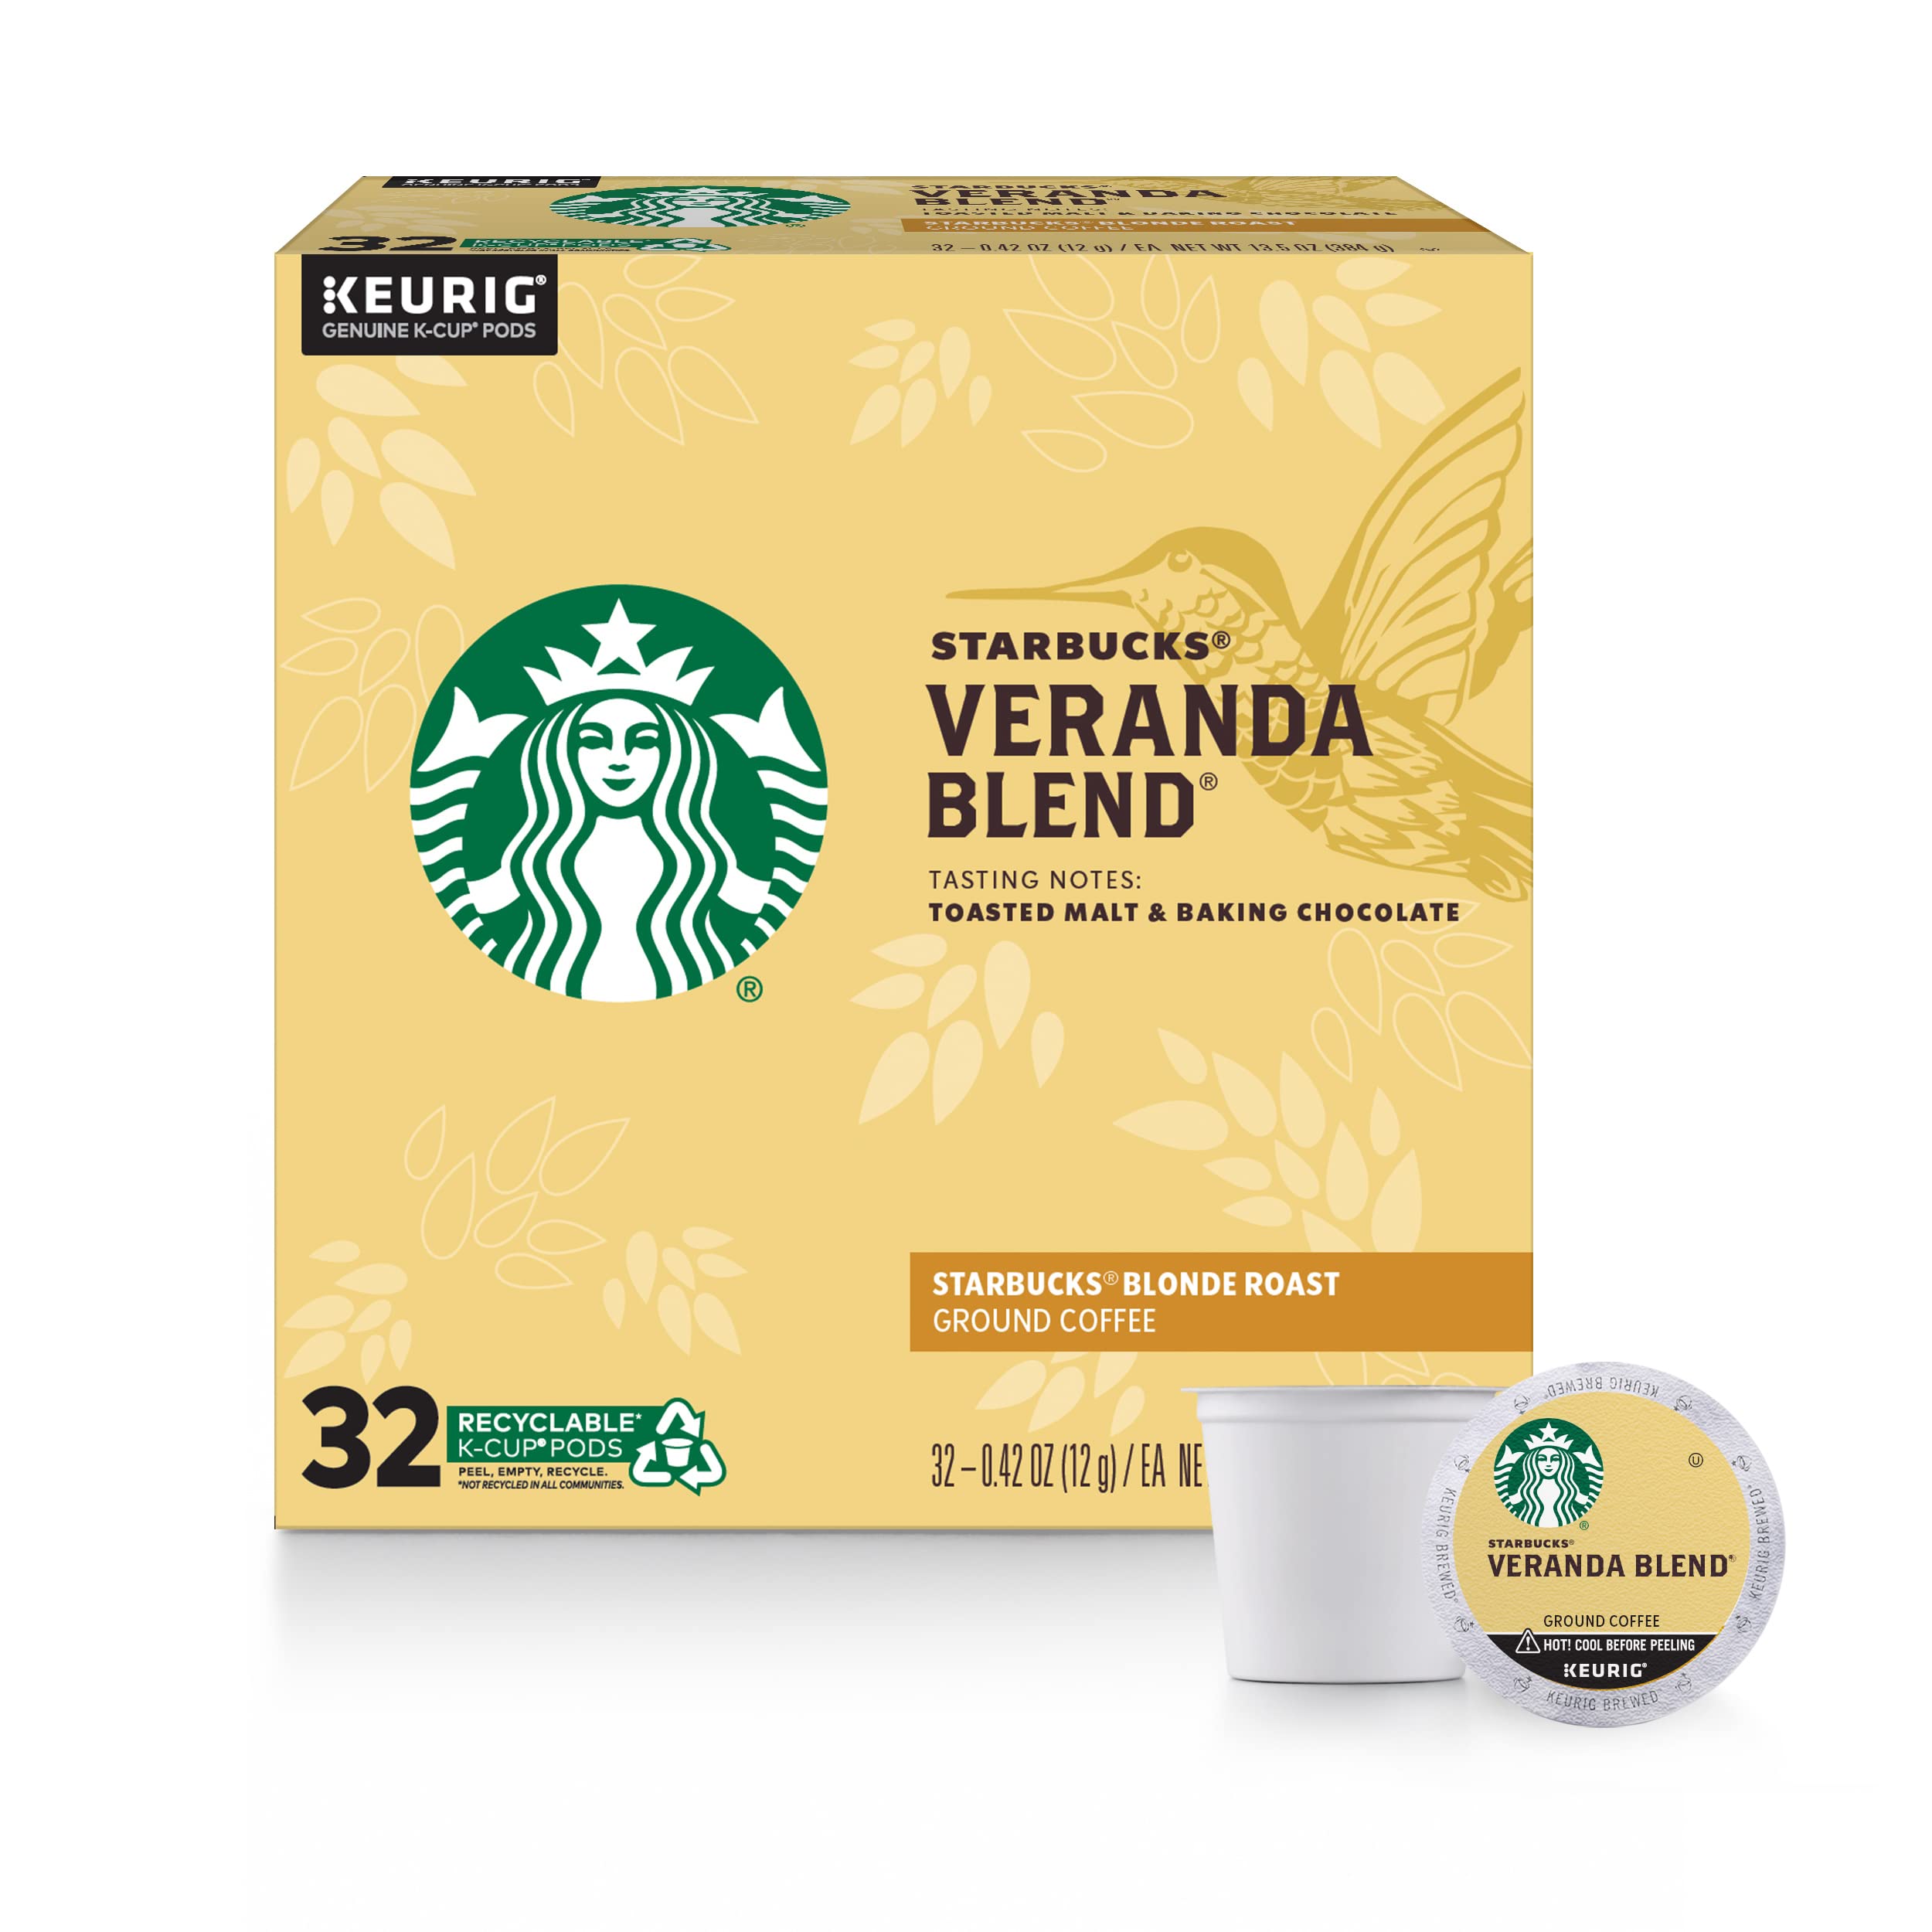 6. Starbucks Blonde Roast K-Cup Coffee Pods